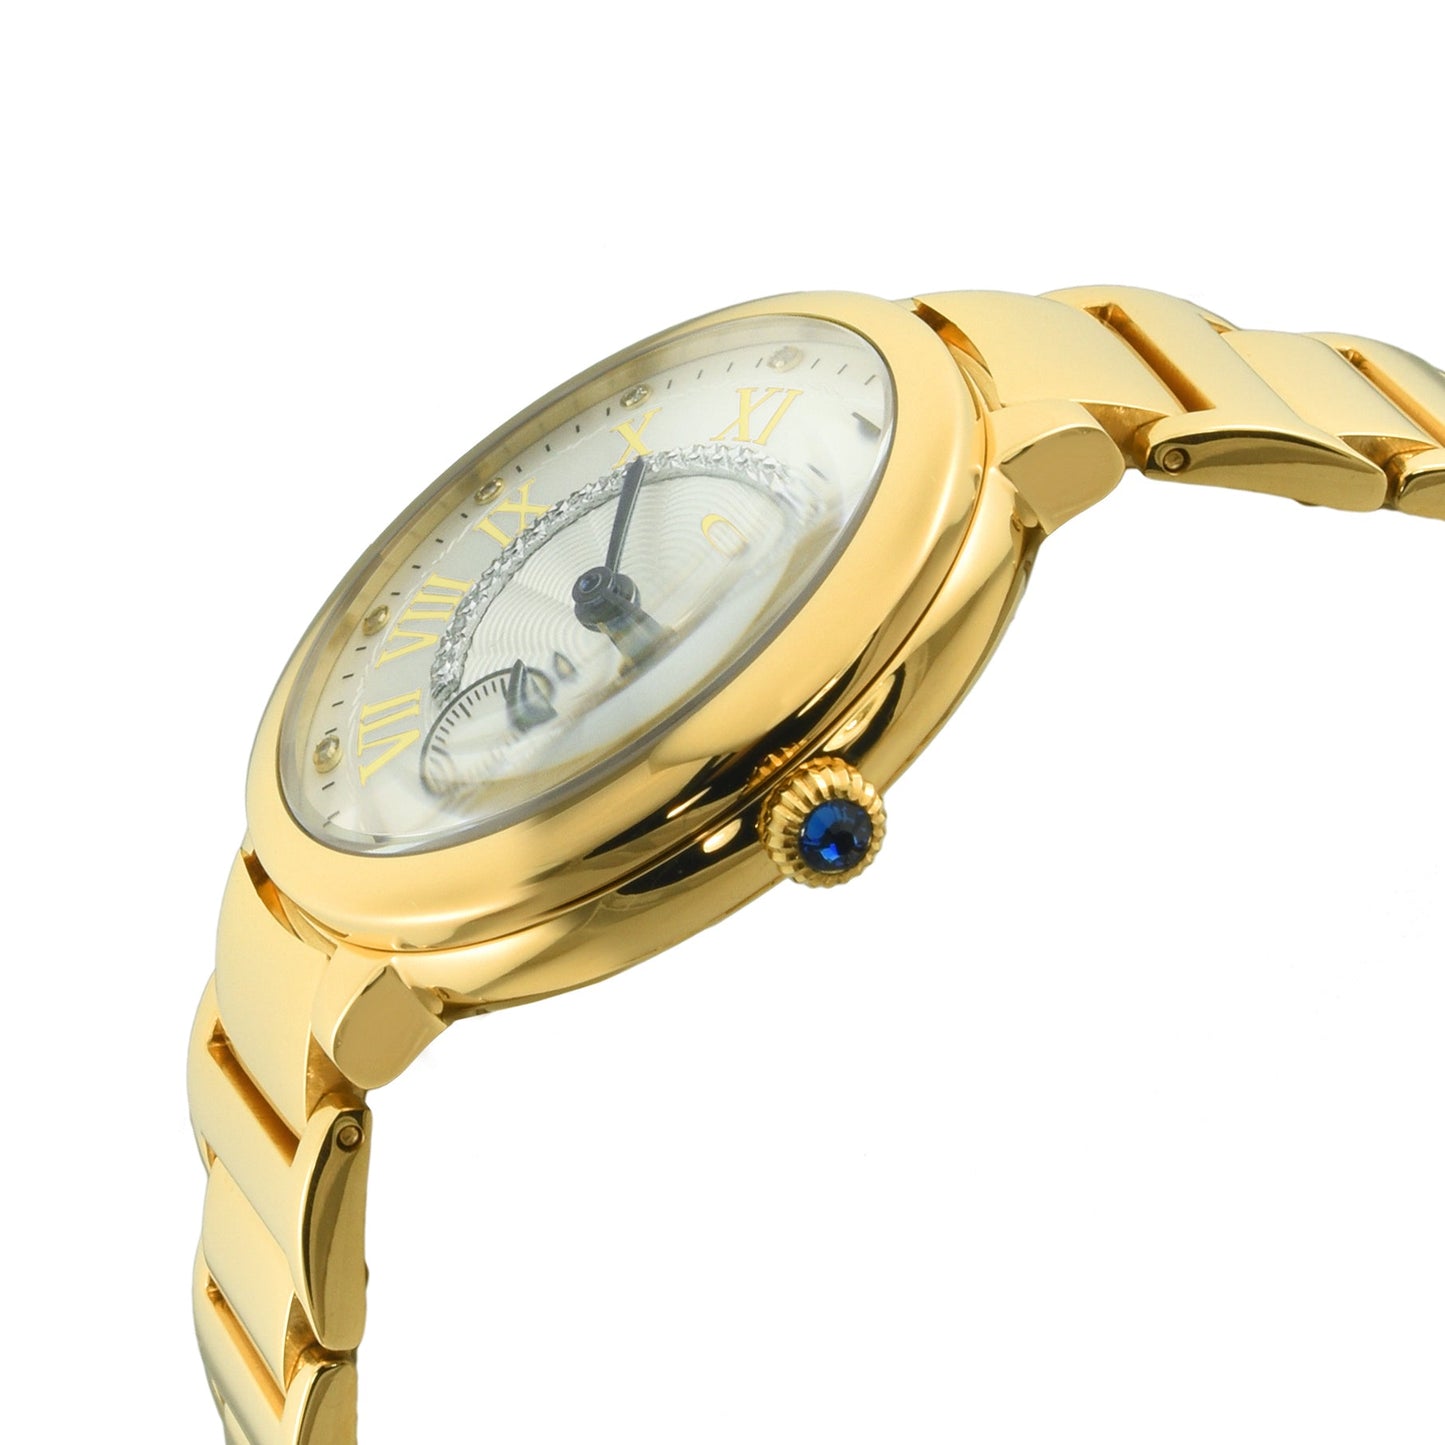 Gevril-Luxury-Swiss-Watches-GV2 Rome Diamond-12208B